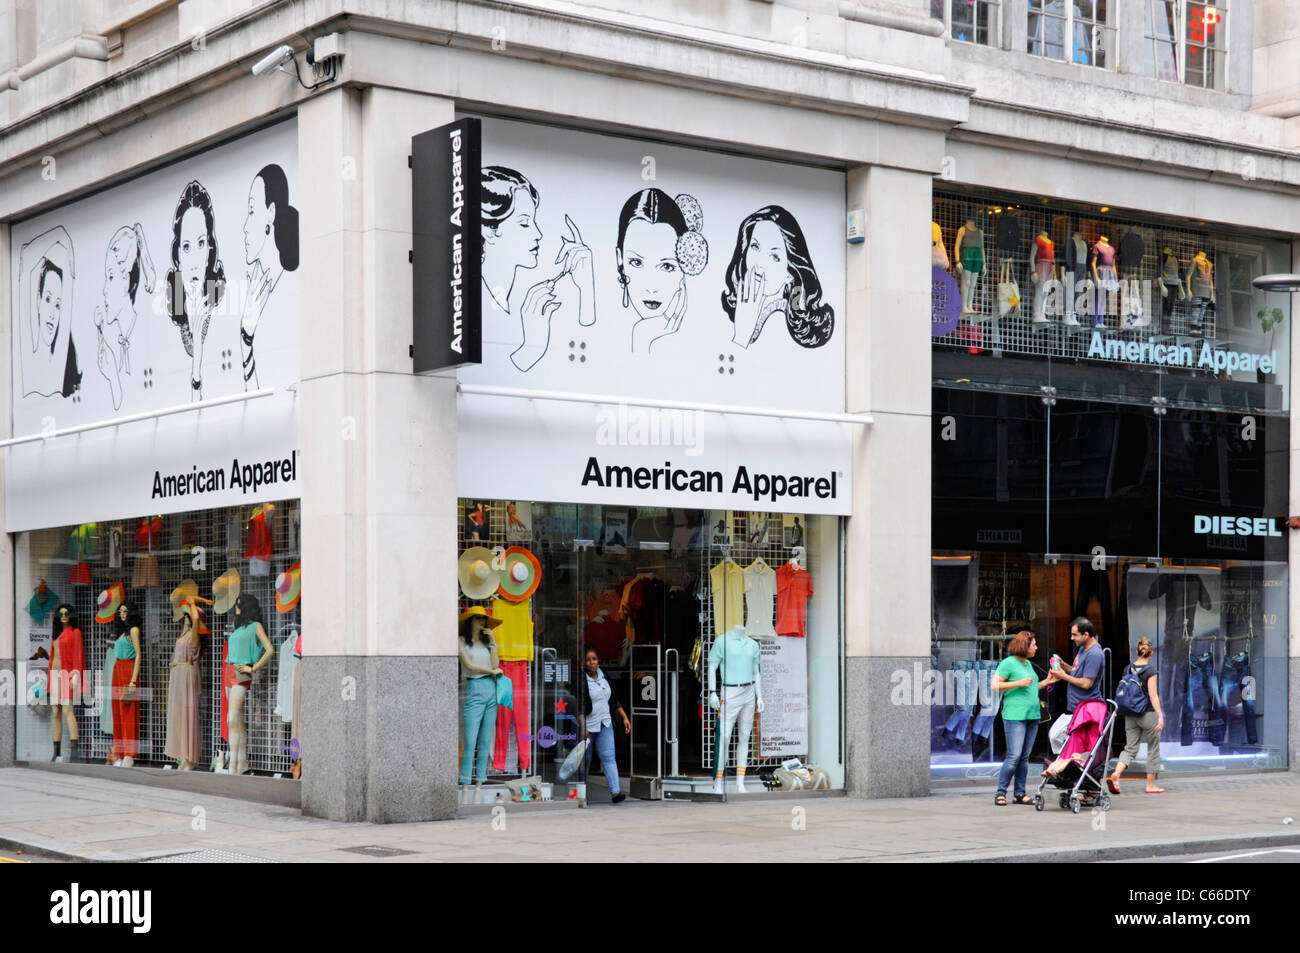 London street scene shop front of American Apparel retail clothing store business on corner shopping location Kensington High Street England UK Stock Photo